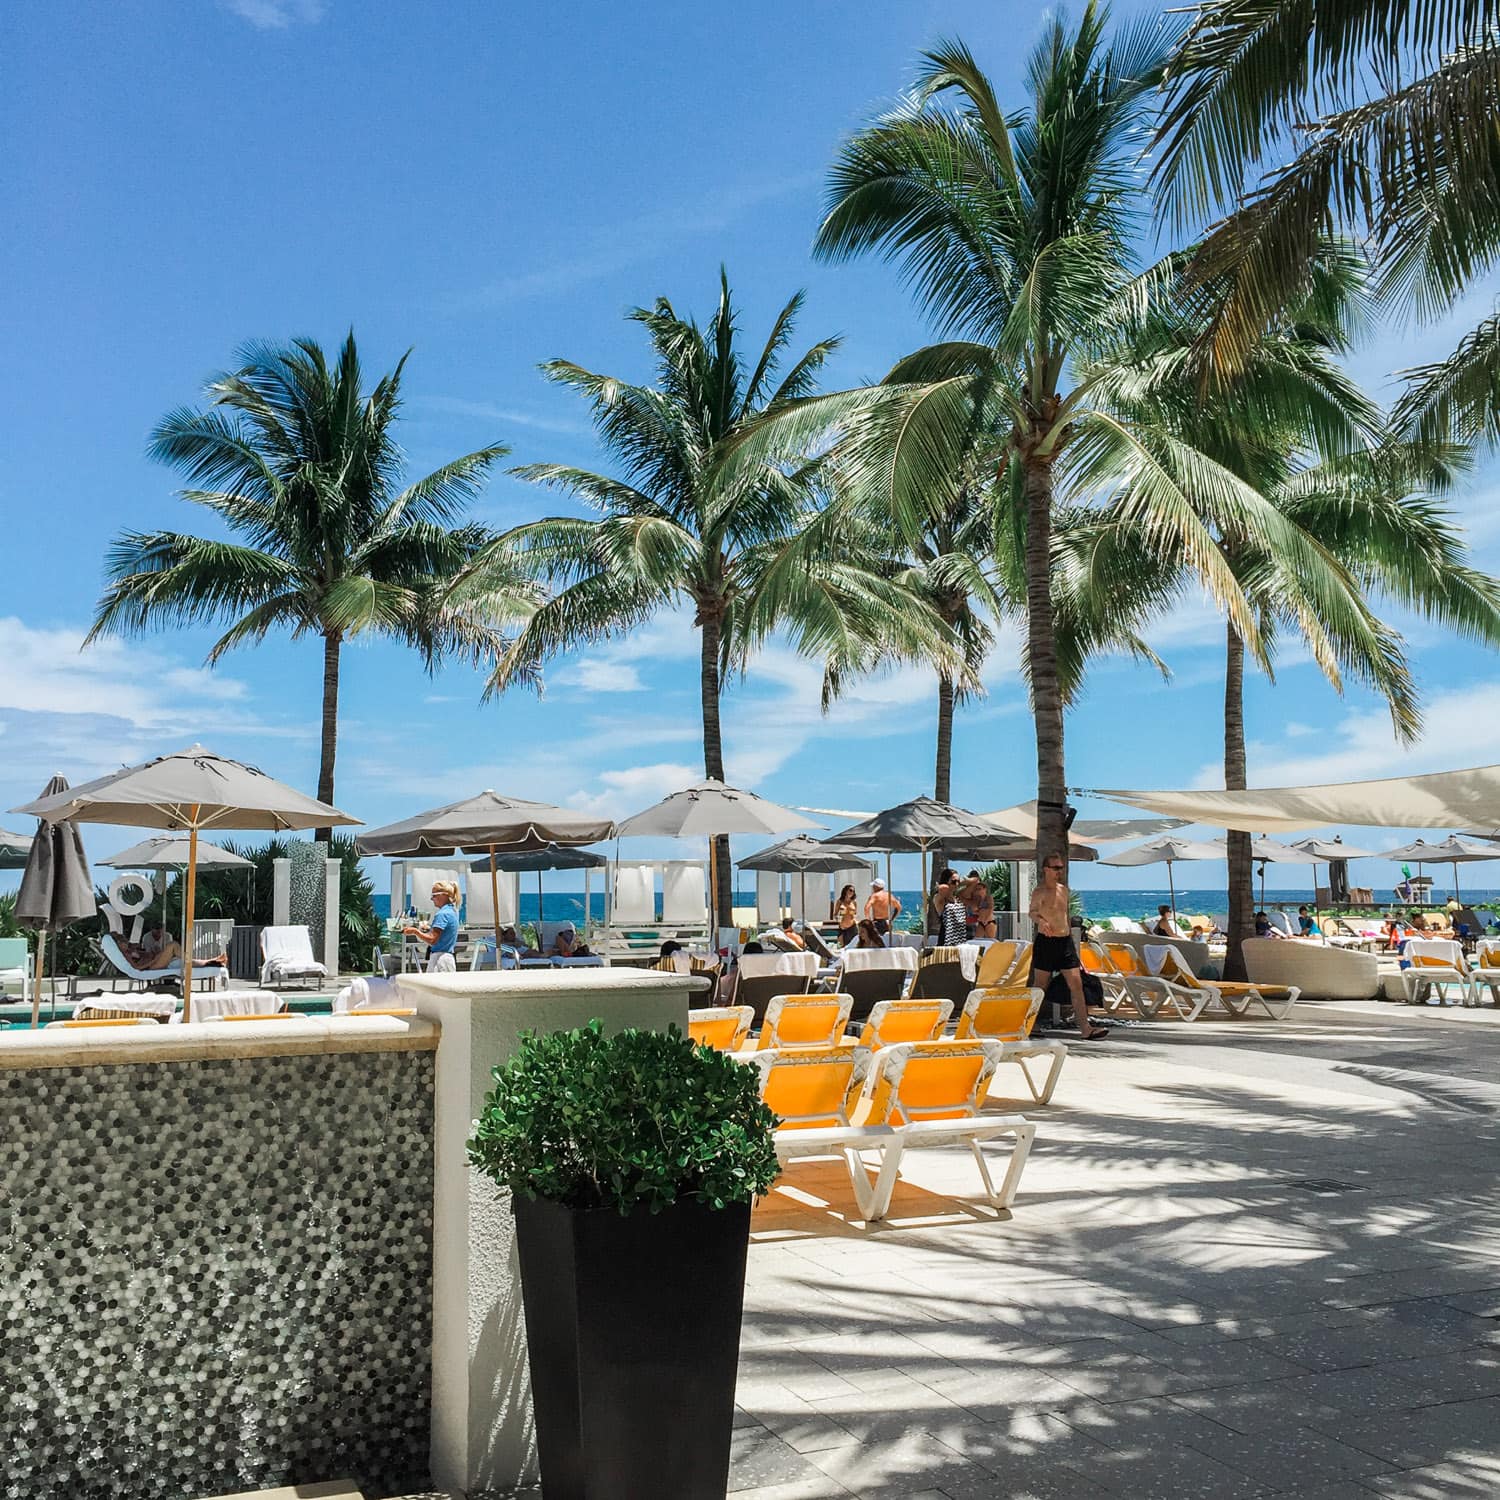 Boca Beach Club overview by blogger Ashley Brooke Nicholas